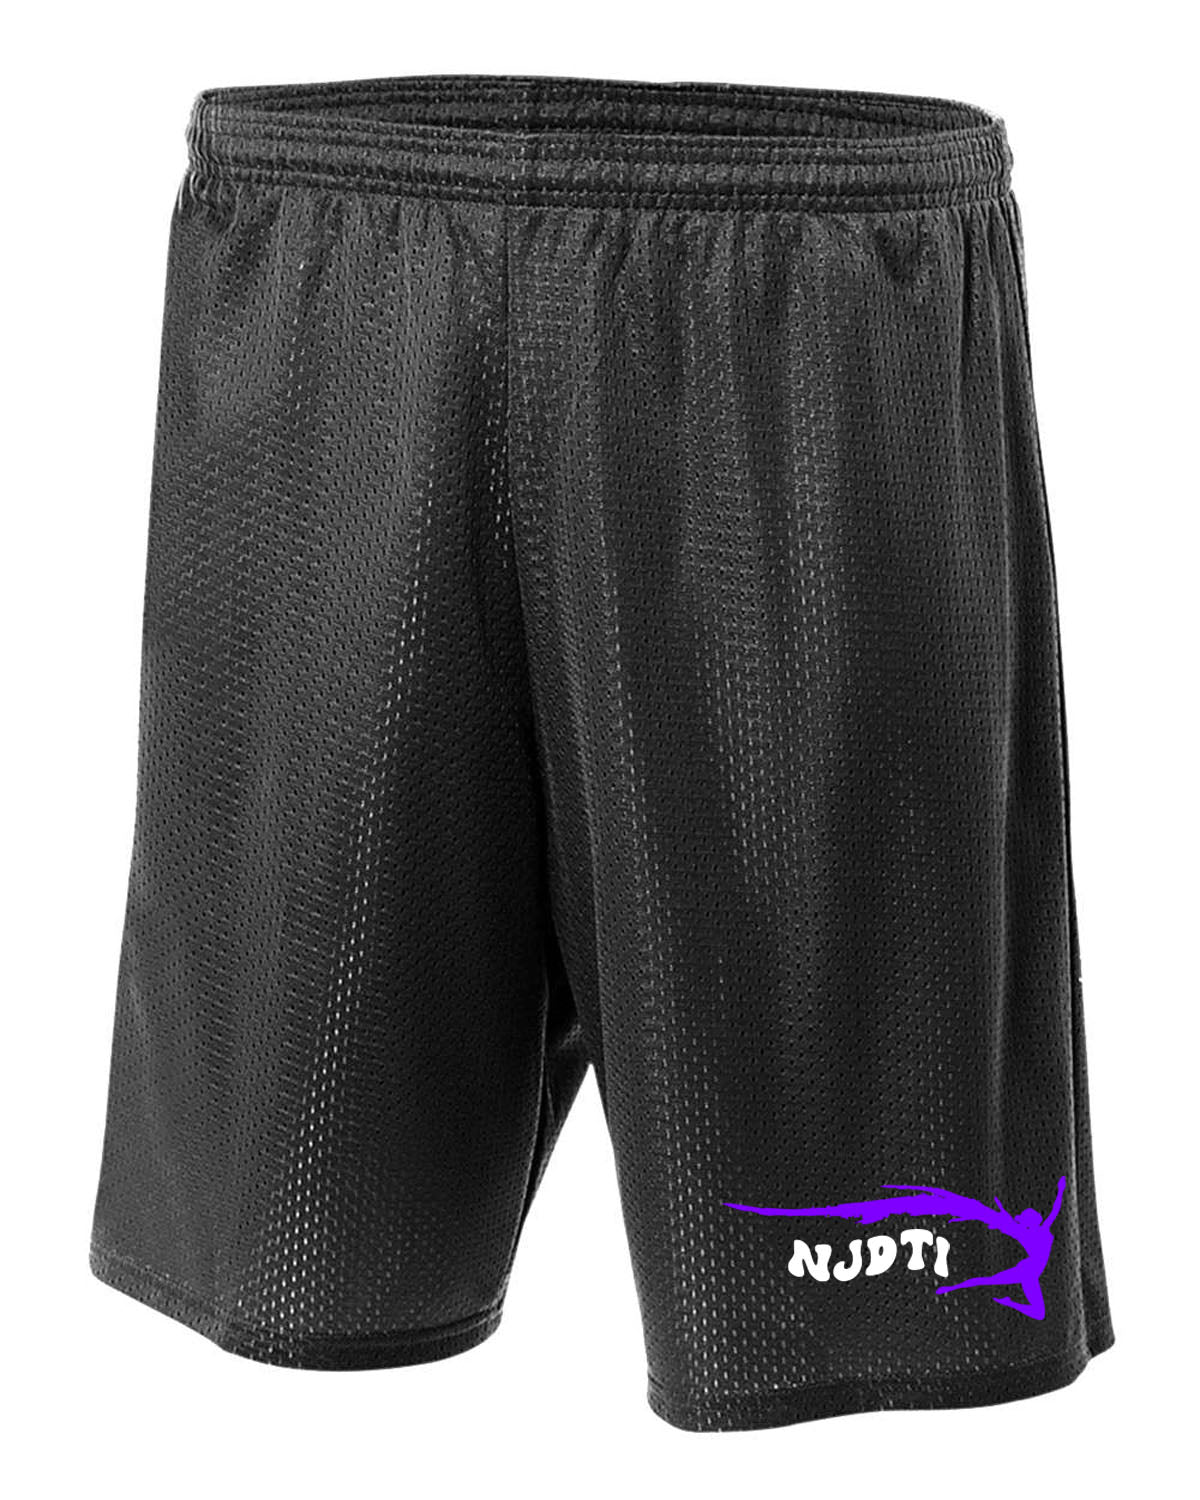 NJ Dance Mesh Shorts Design 12